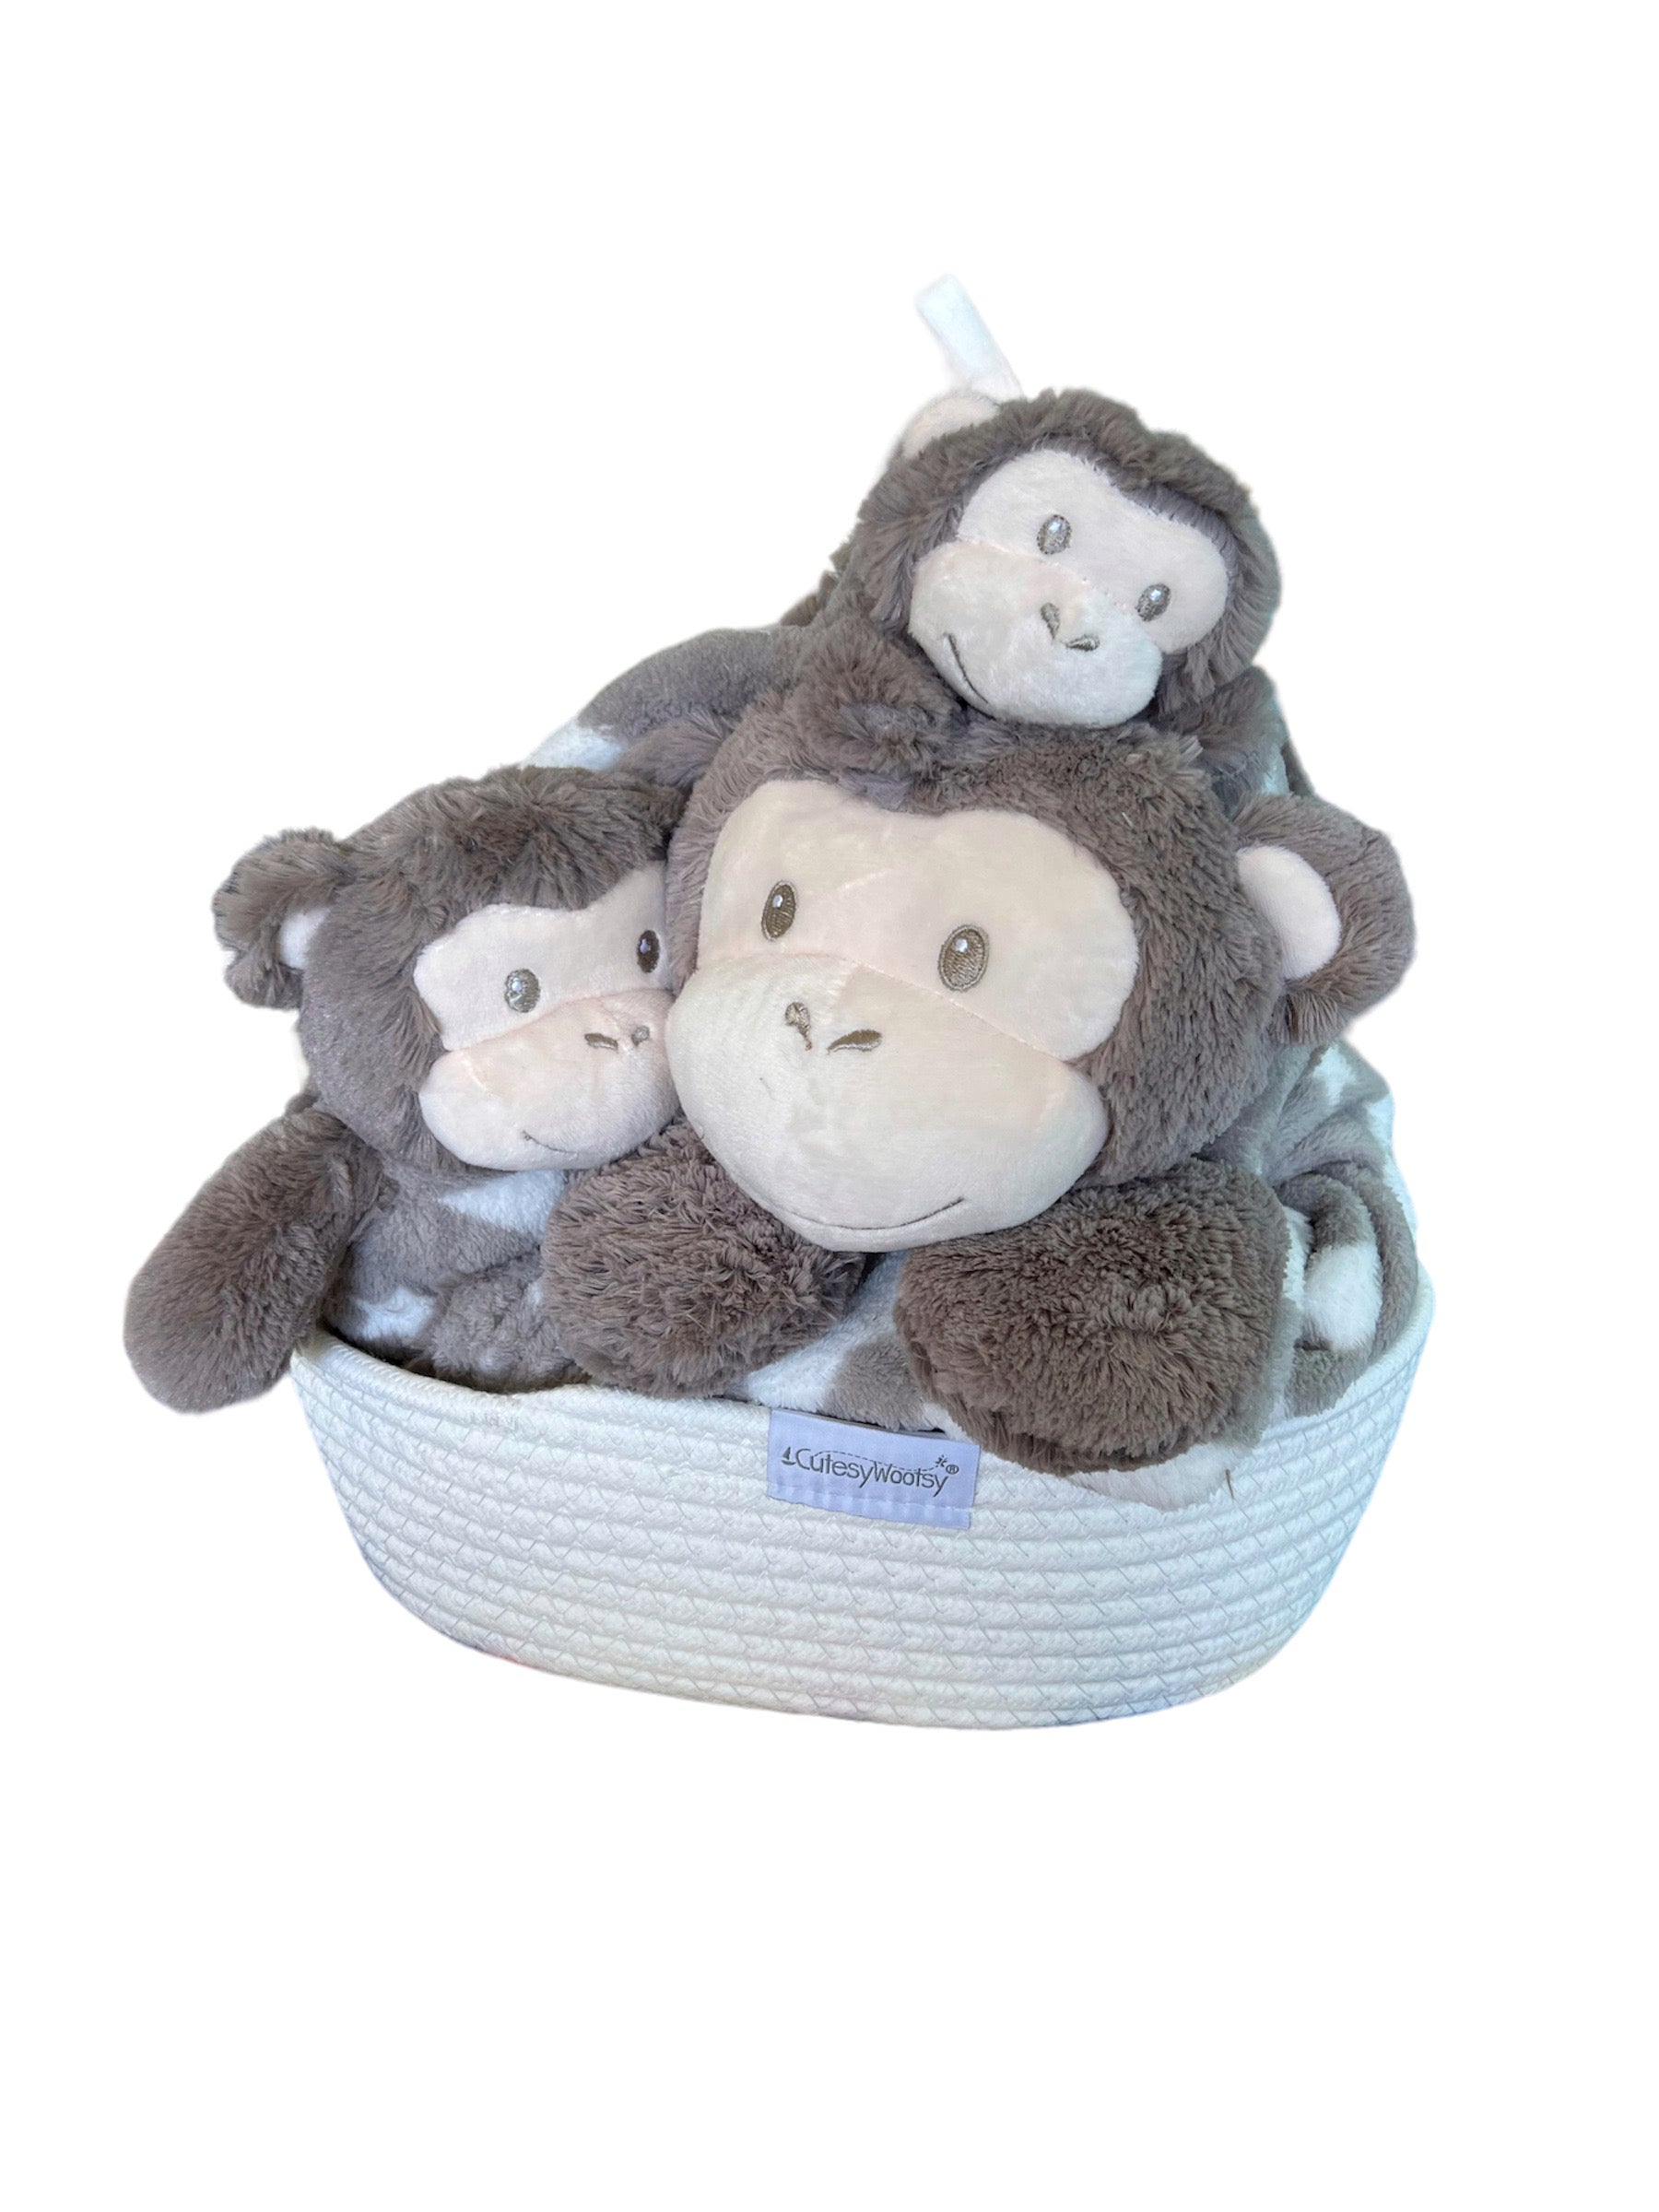 Dream Team Bundles in White Cotton Nursery Basket - Cutesy Wootsy